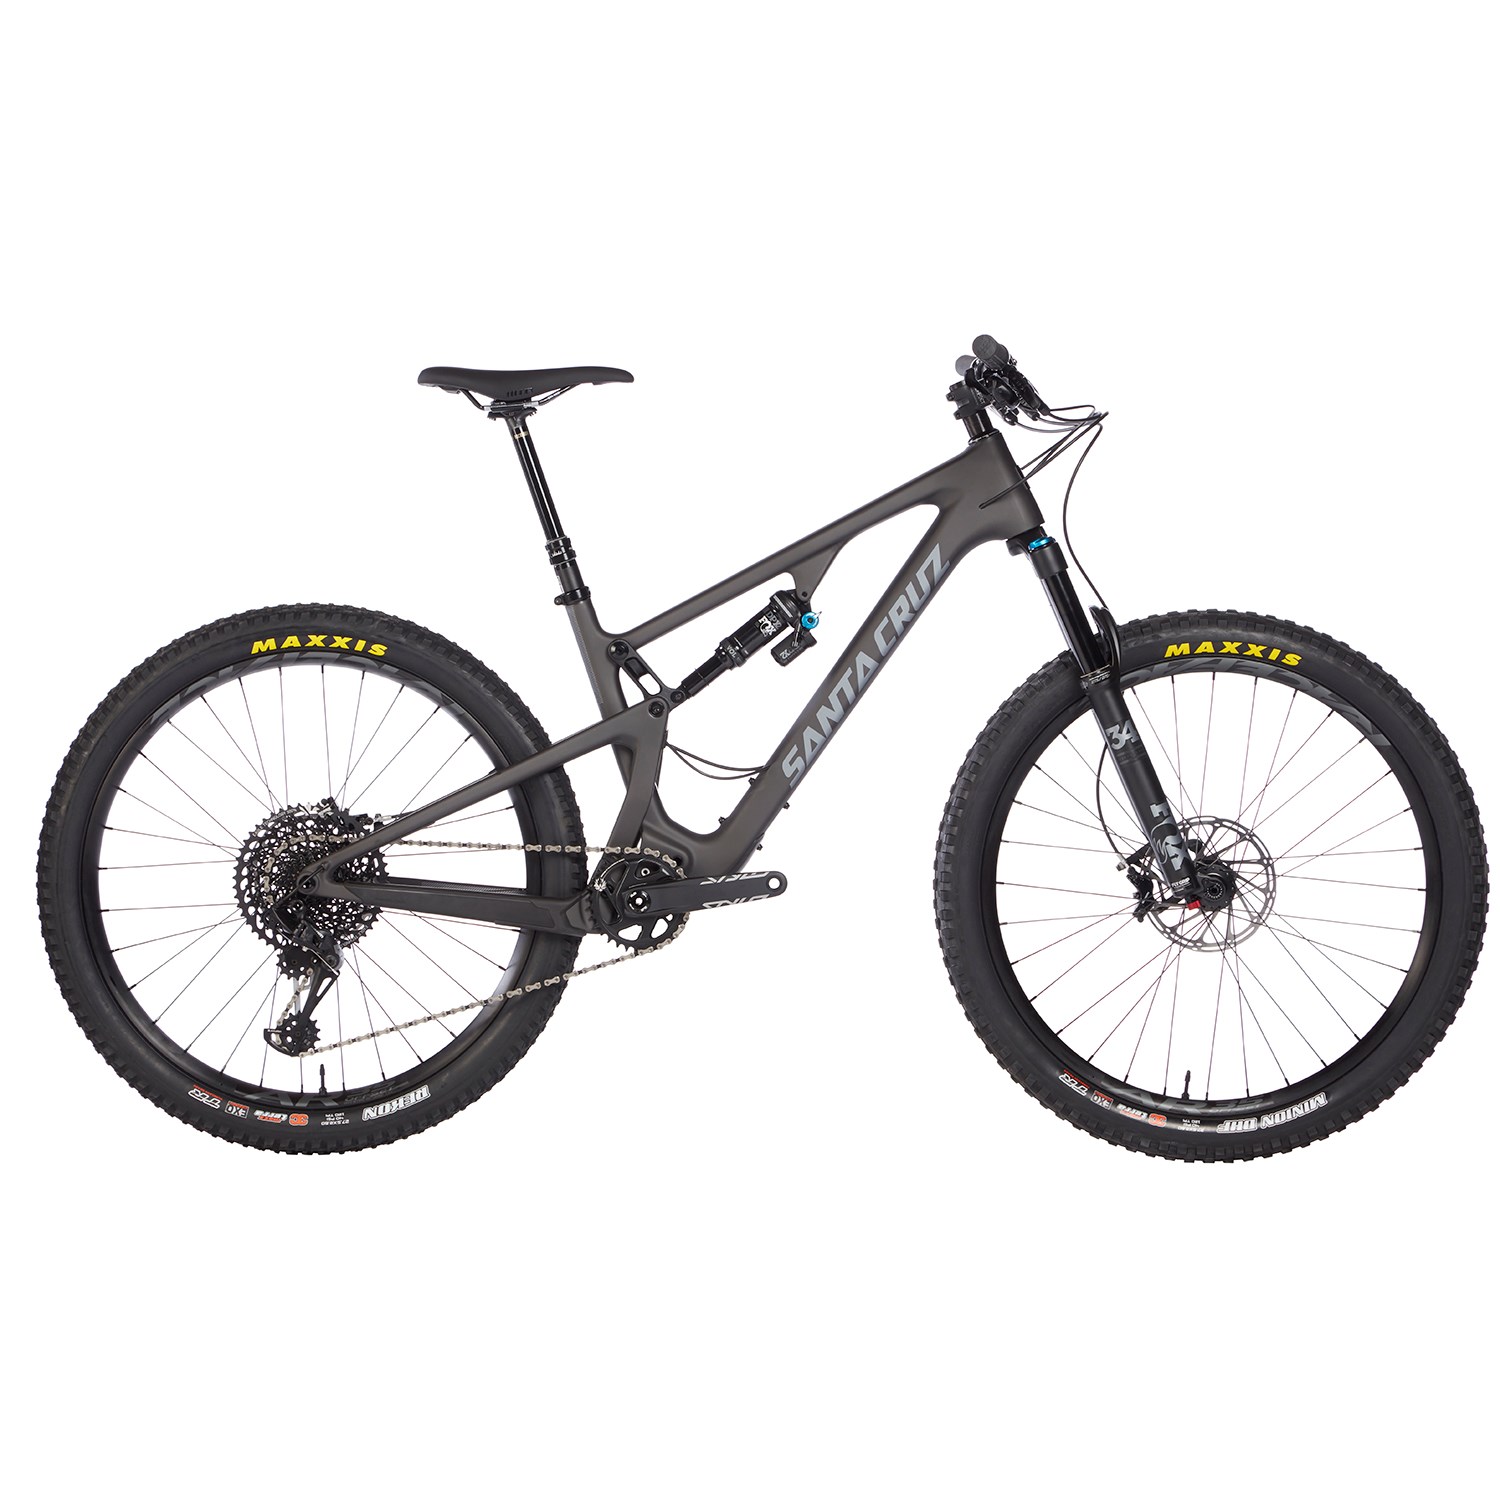 5010 mountain bike